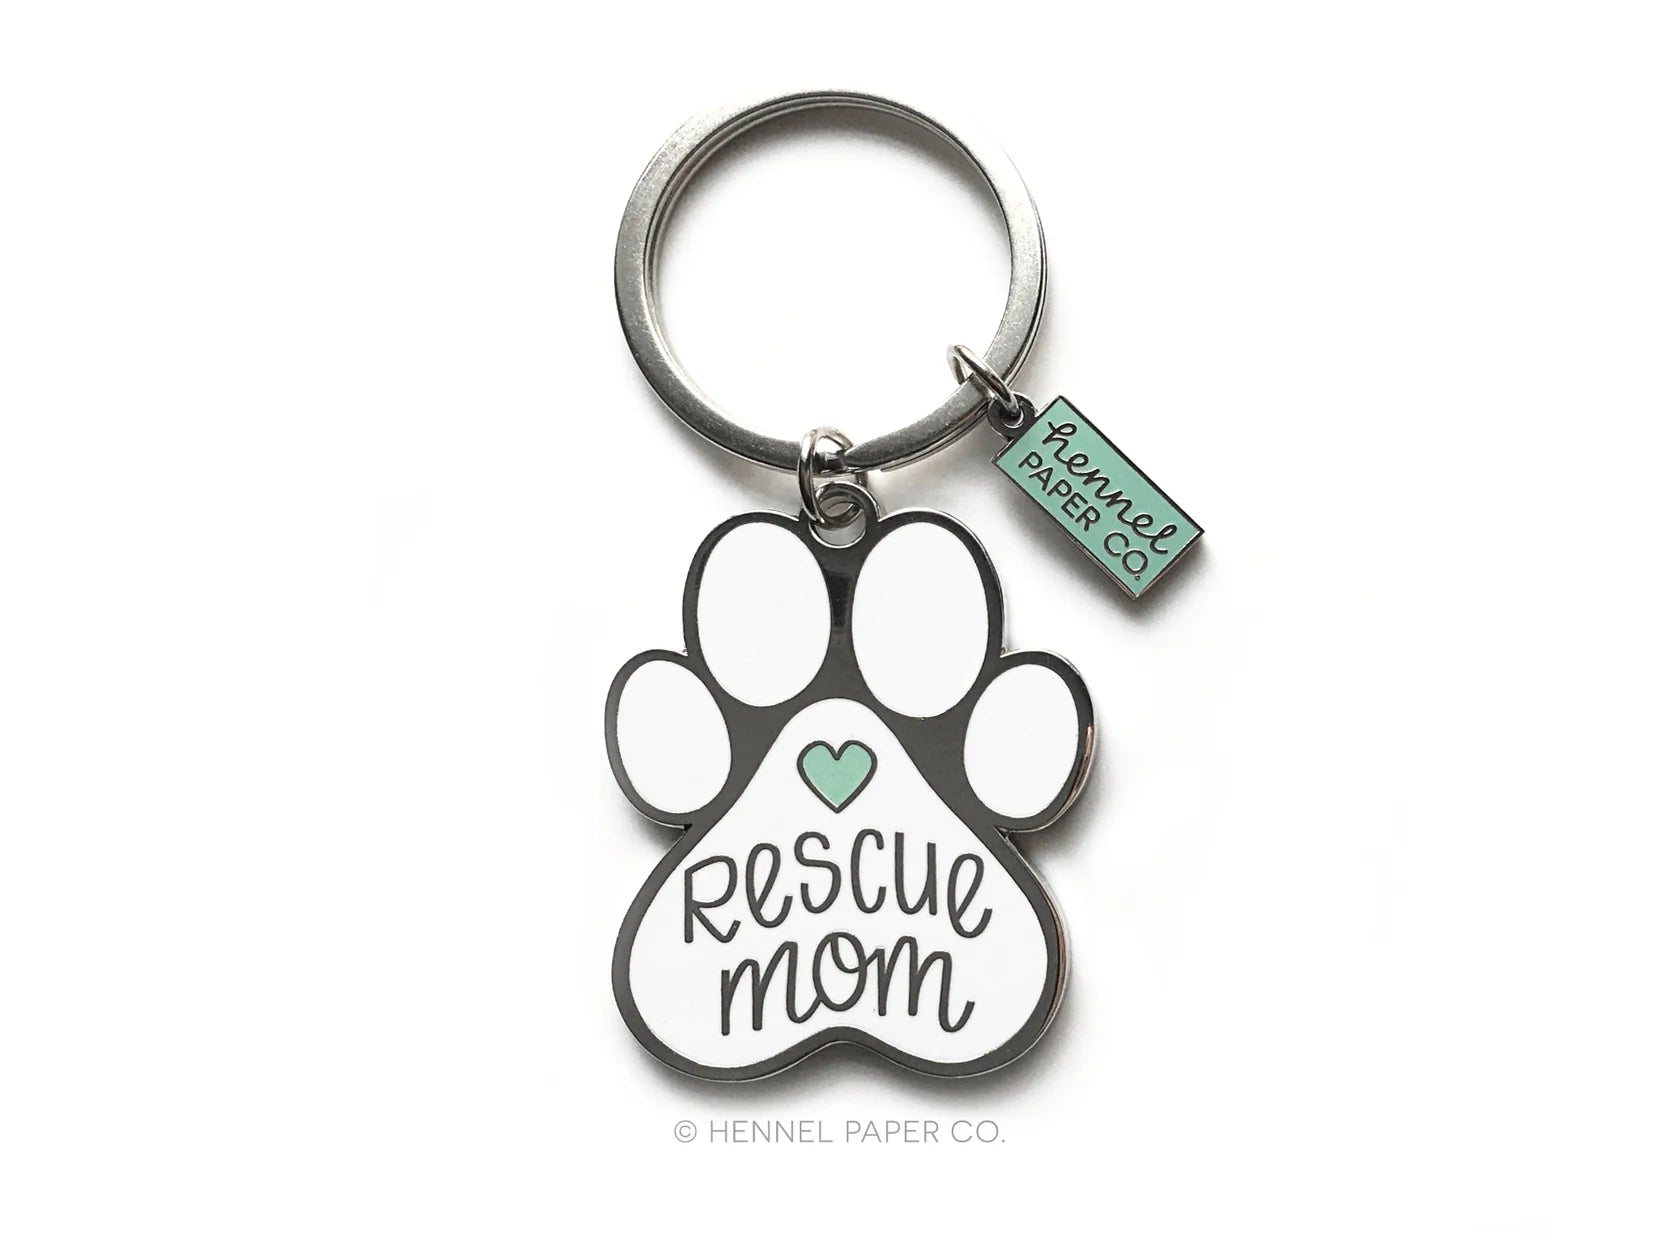 Rescue dog mom keychain